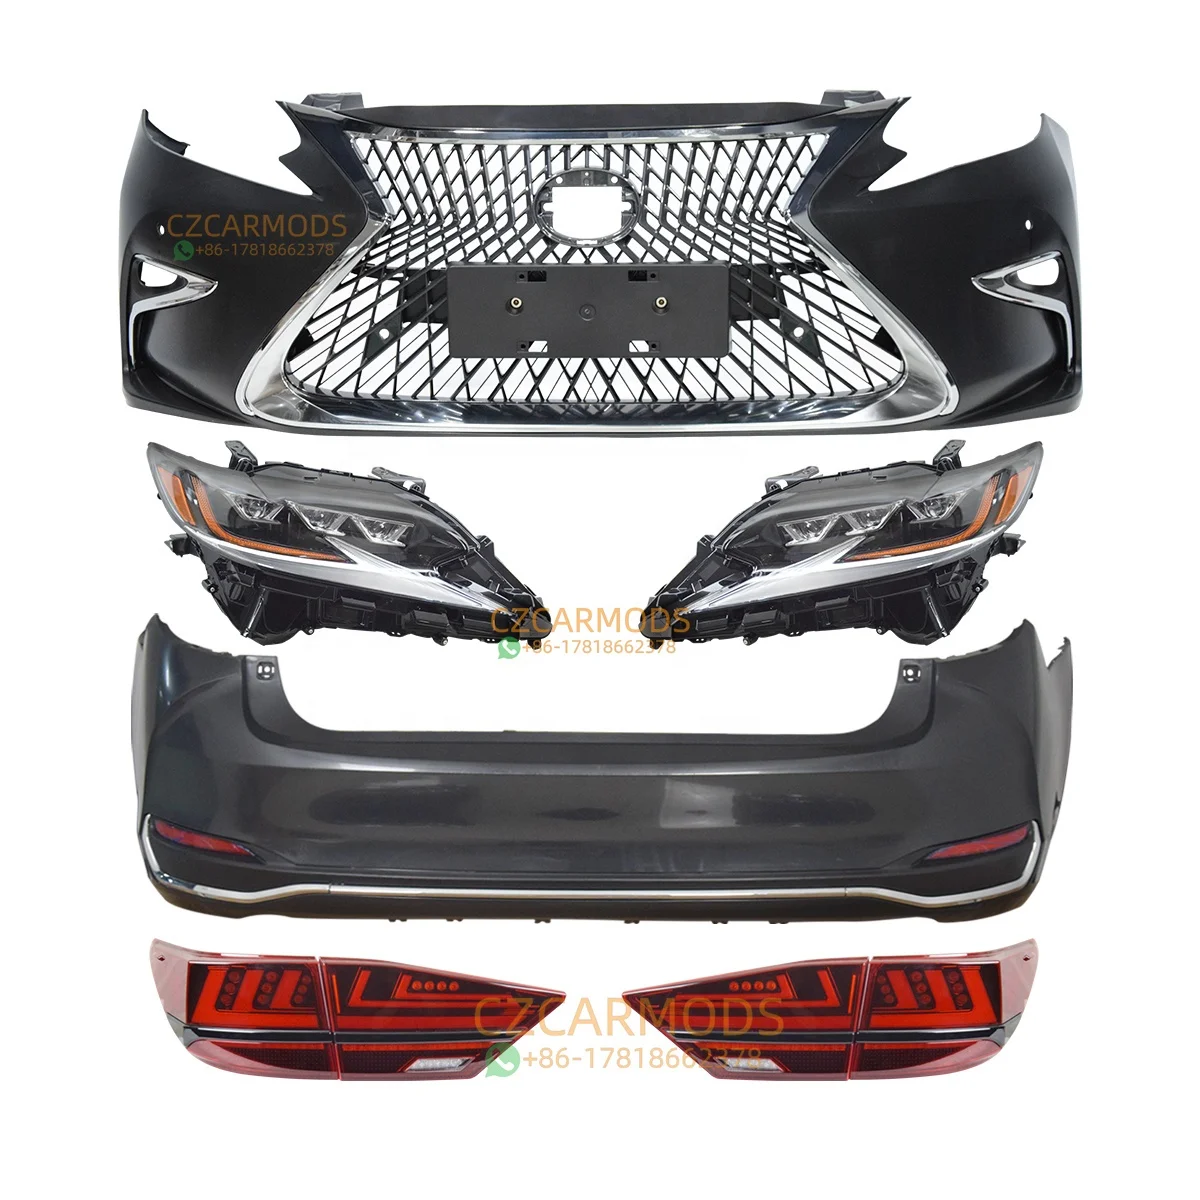 

Car Body Kits for LEXUS ES 250 ES300h ES350 2012 2013-2018 Upgrade LS Front Bumper Triple LED Headlights Rear Bumper Tail Lights